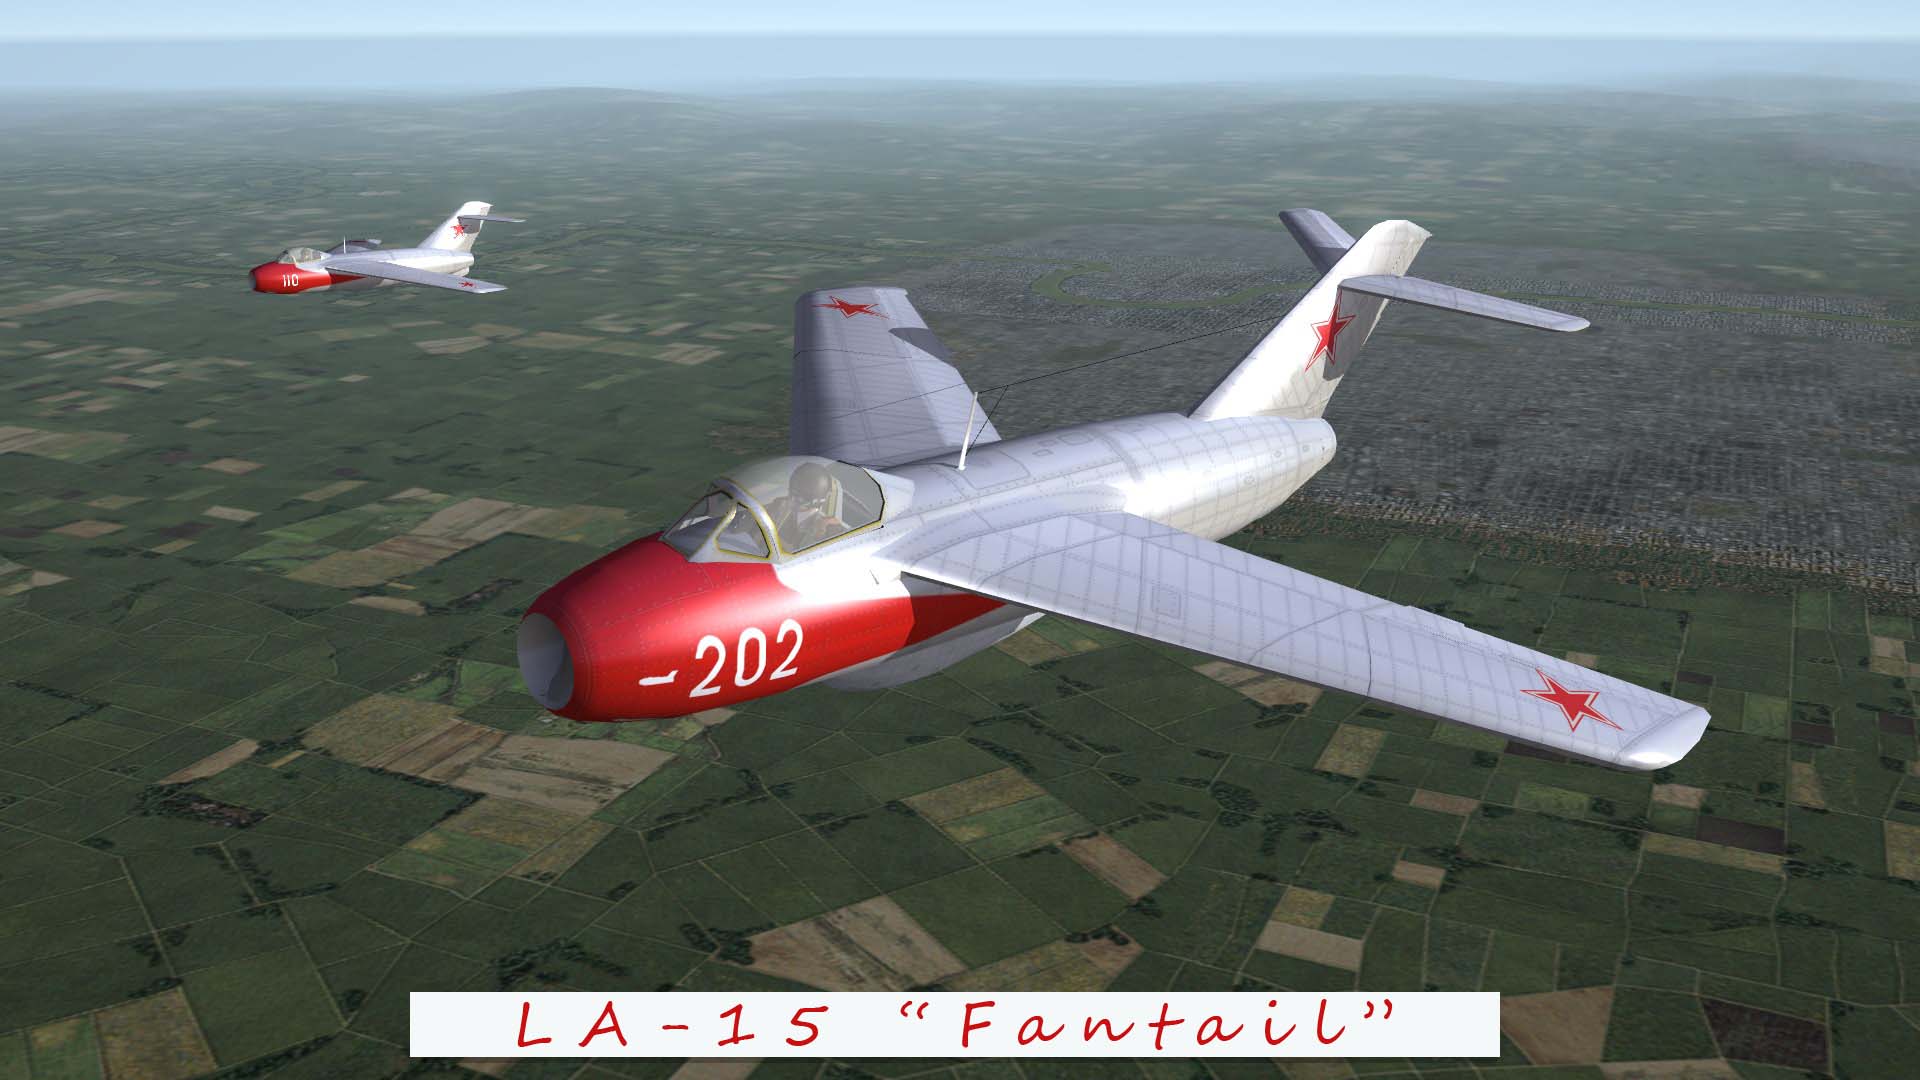 LA-15 "Fantail" Redux